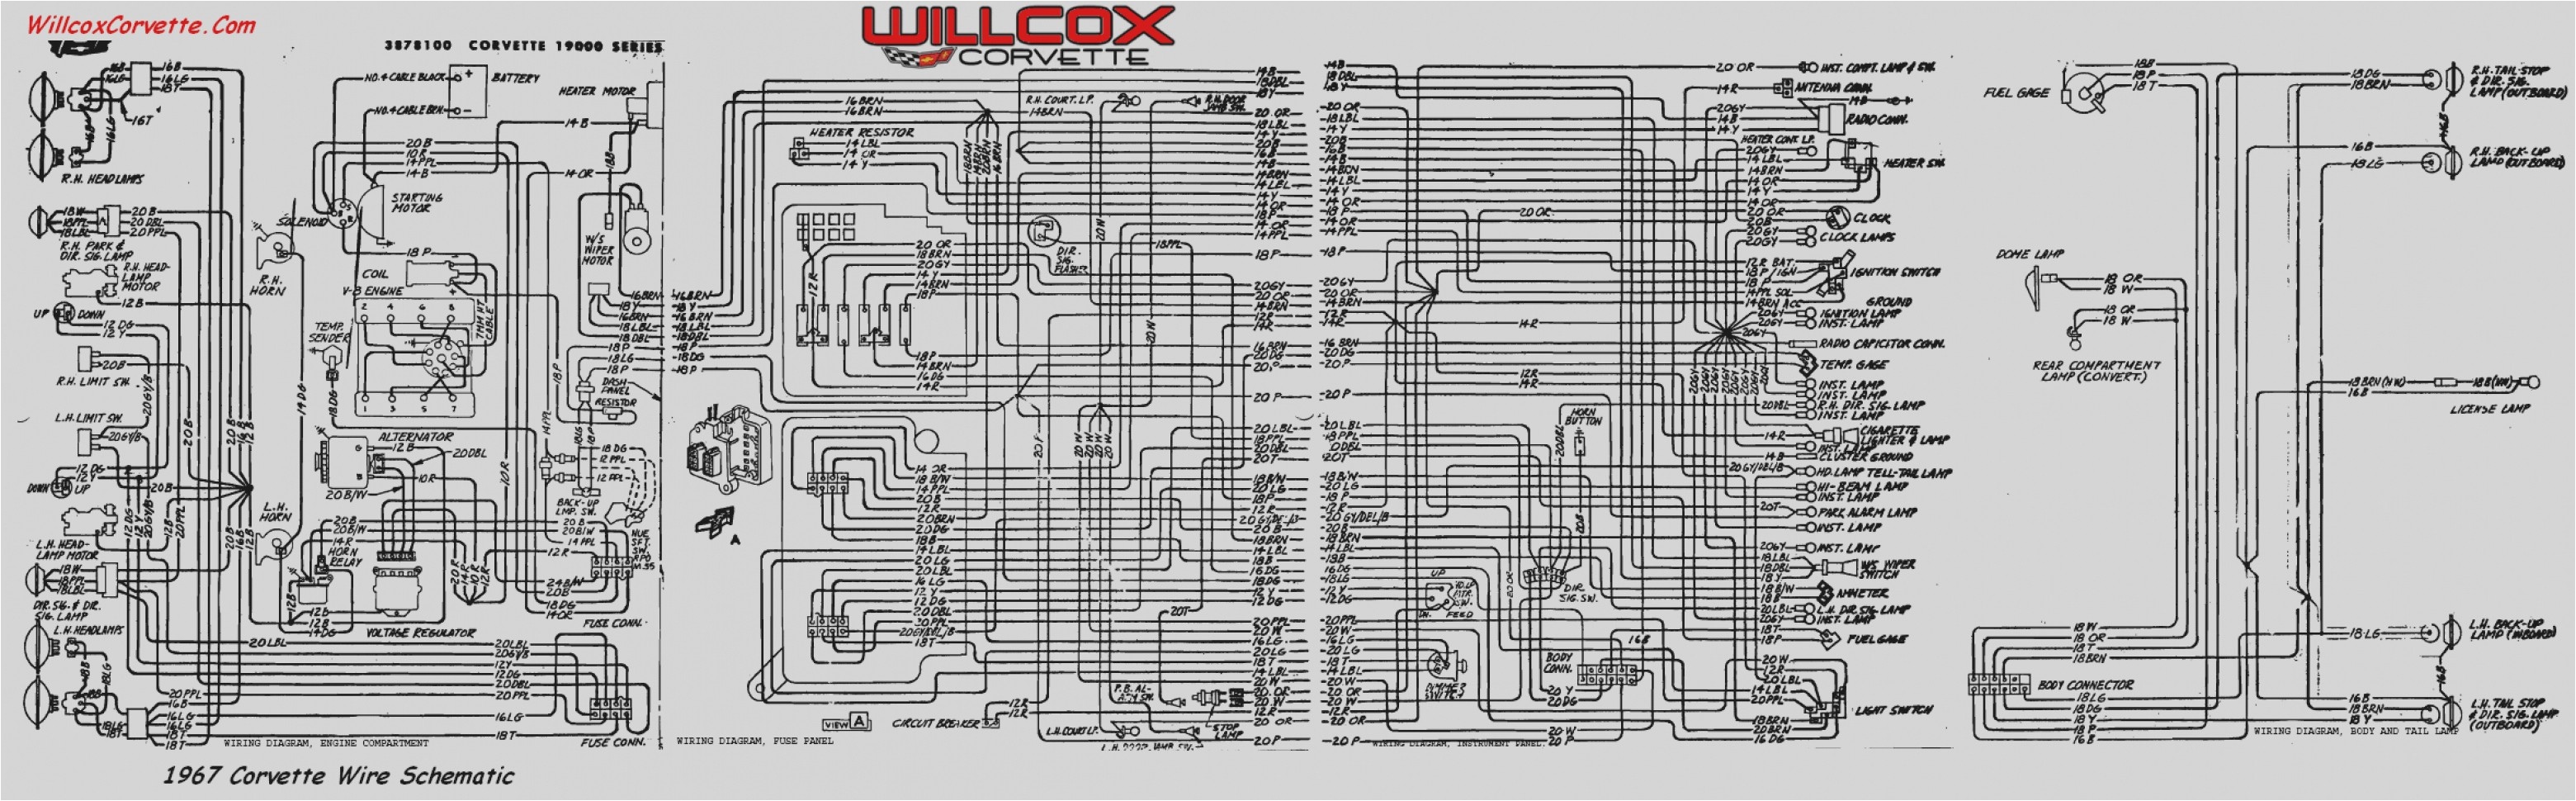 86 corvette ac wiring wiring diagram page 1985 corvette engine harness diagram